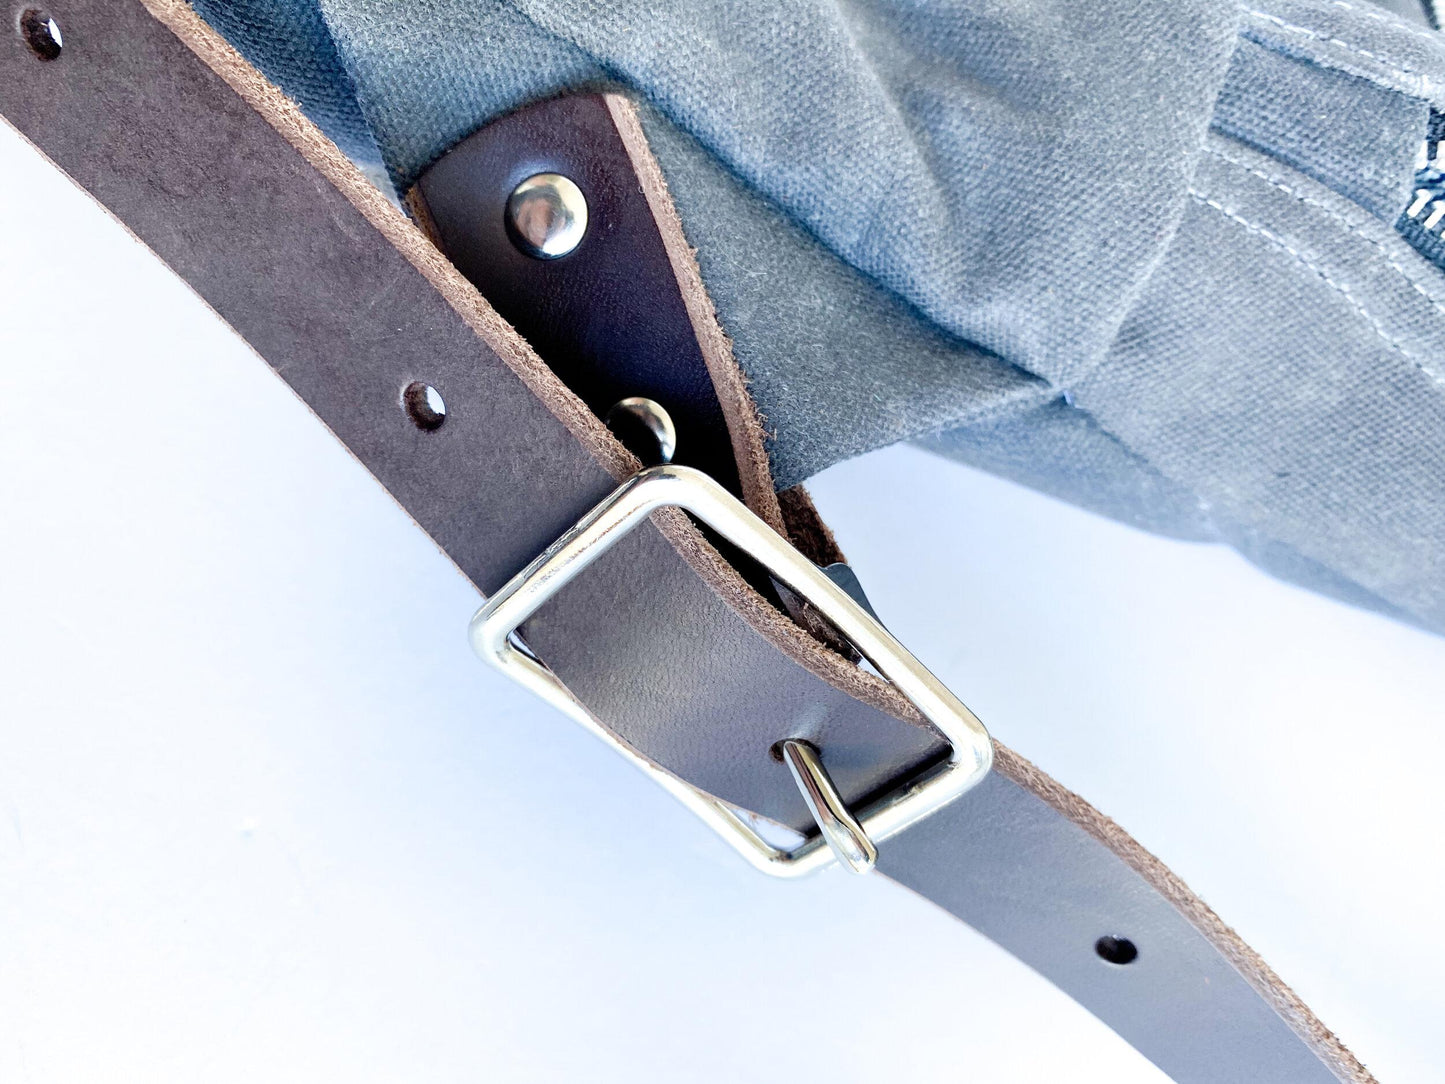 Backpack strap & buckle detail.